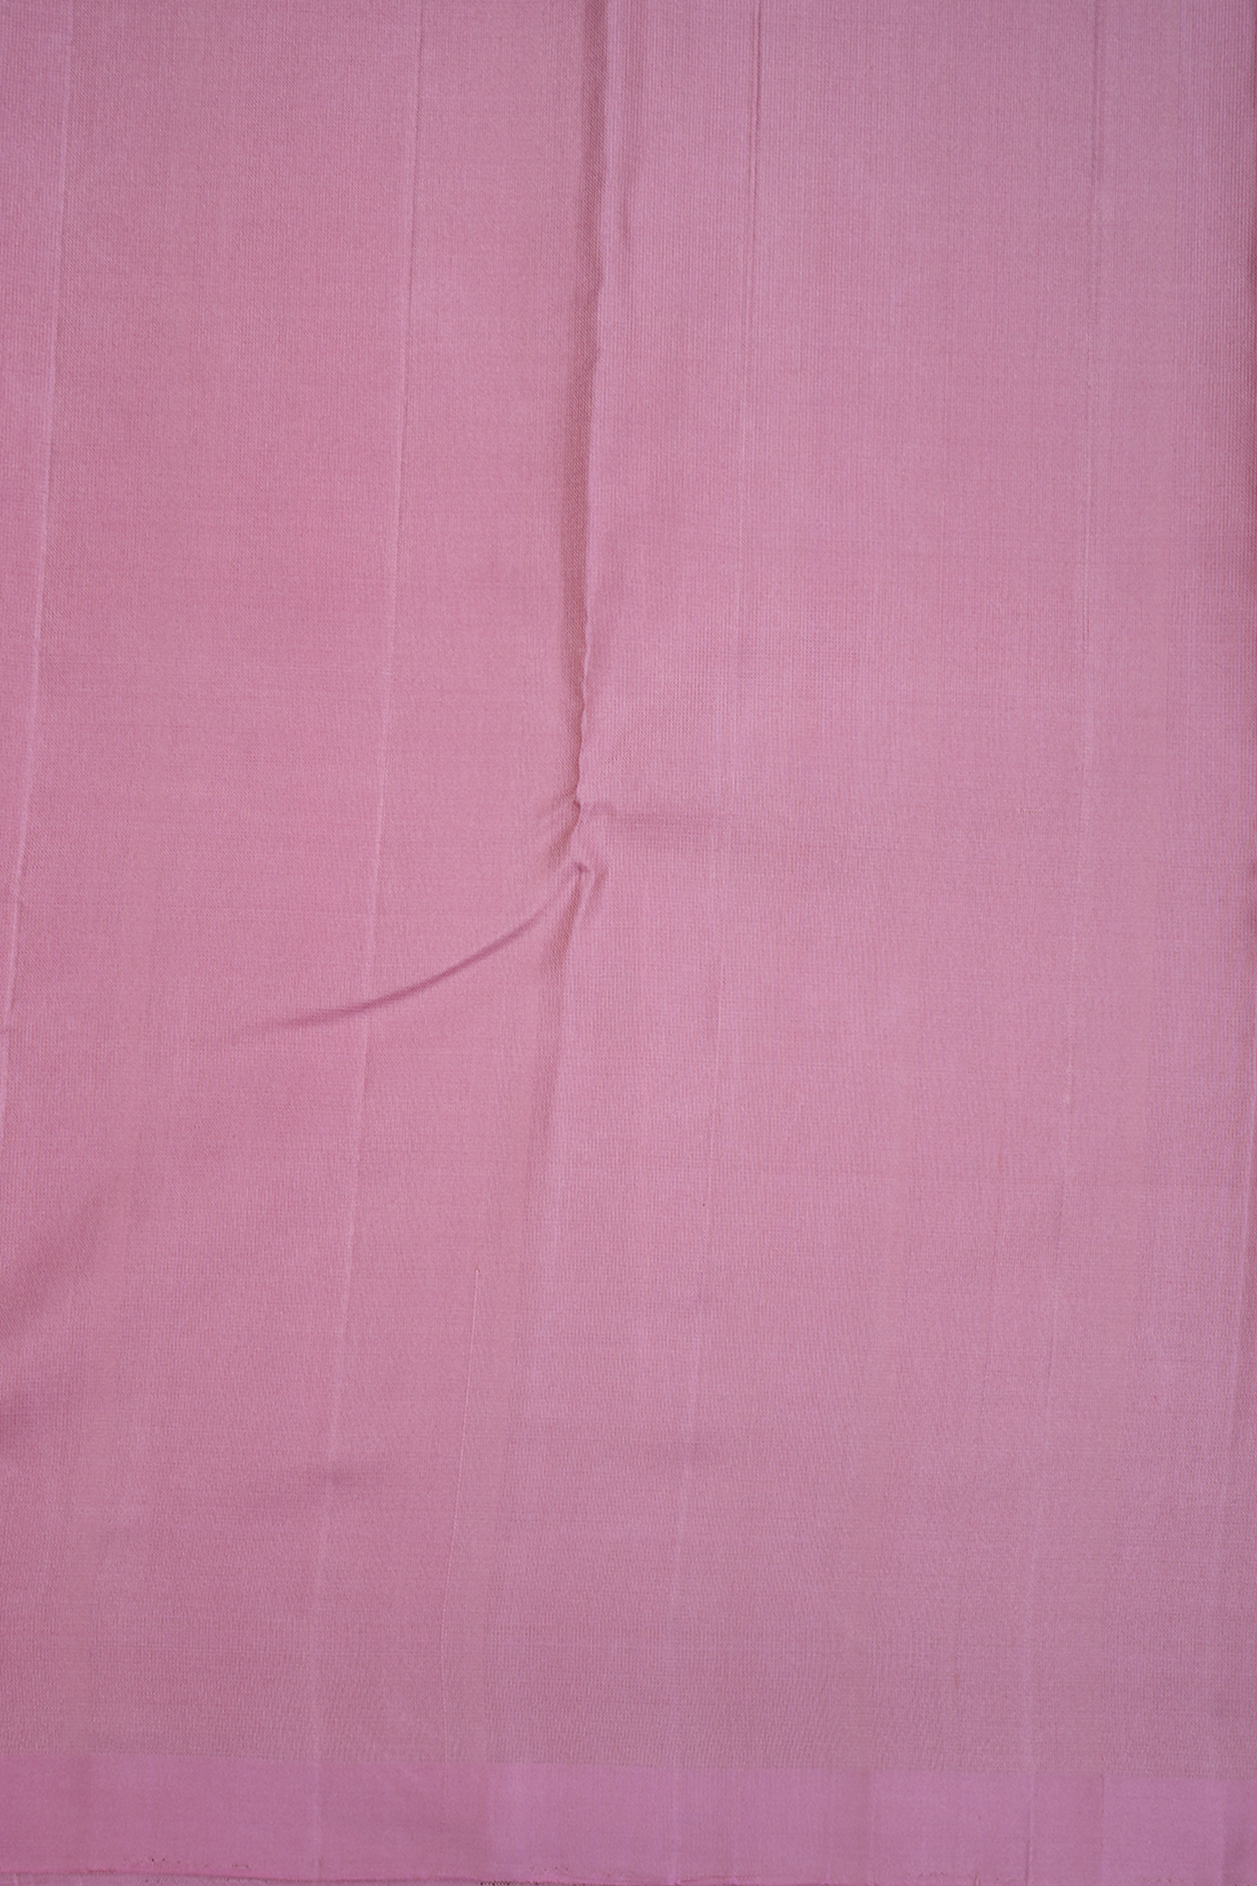 Mandala Zari Design Onion Pink Kanchipuram Silk Saree